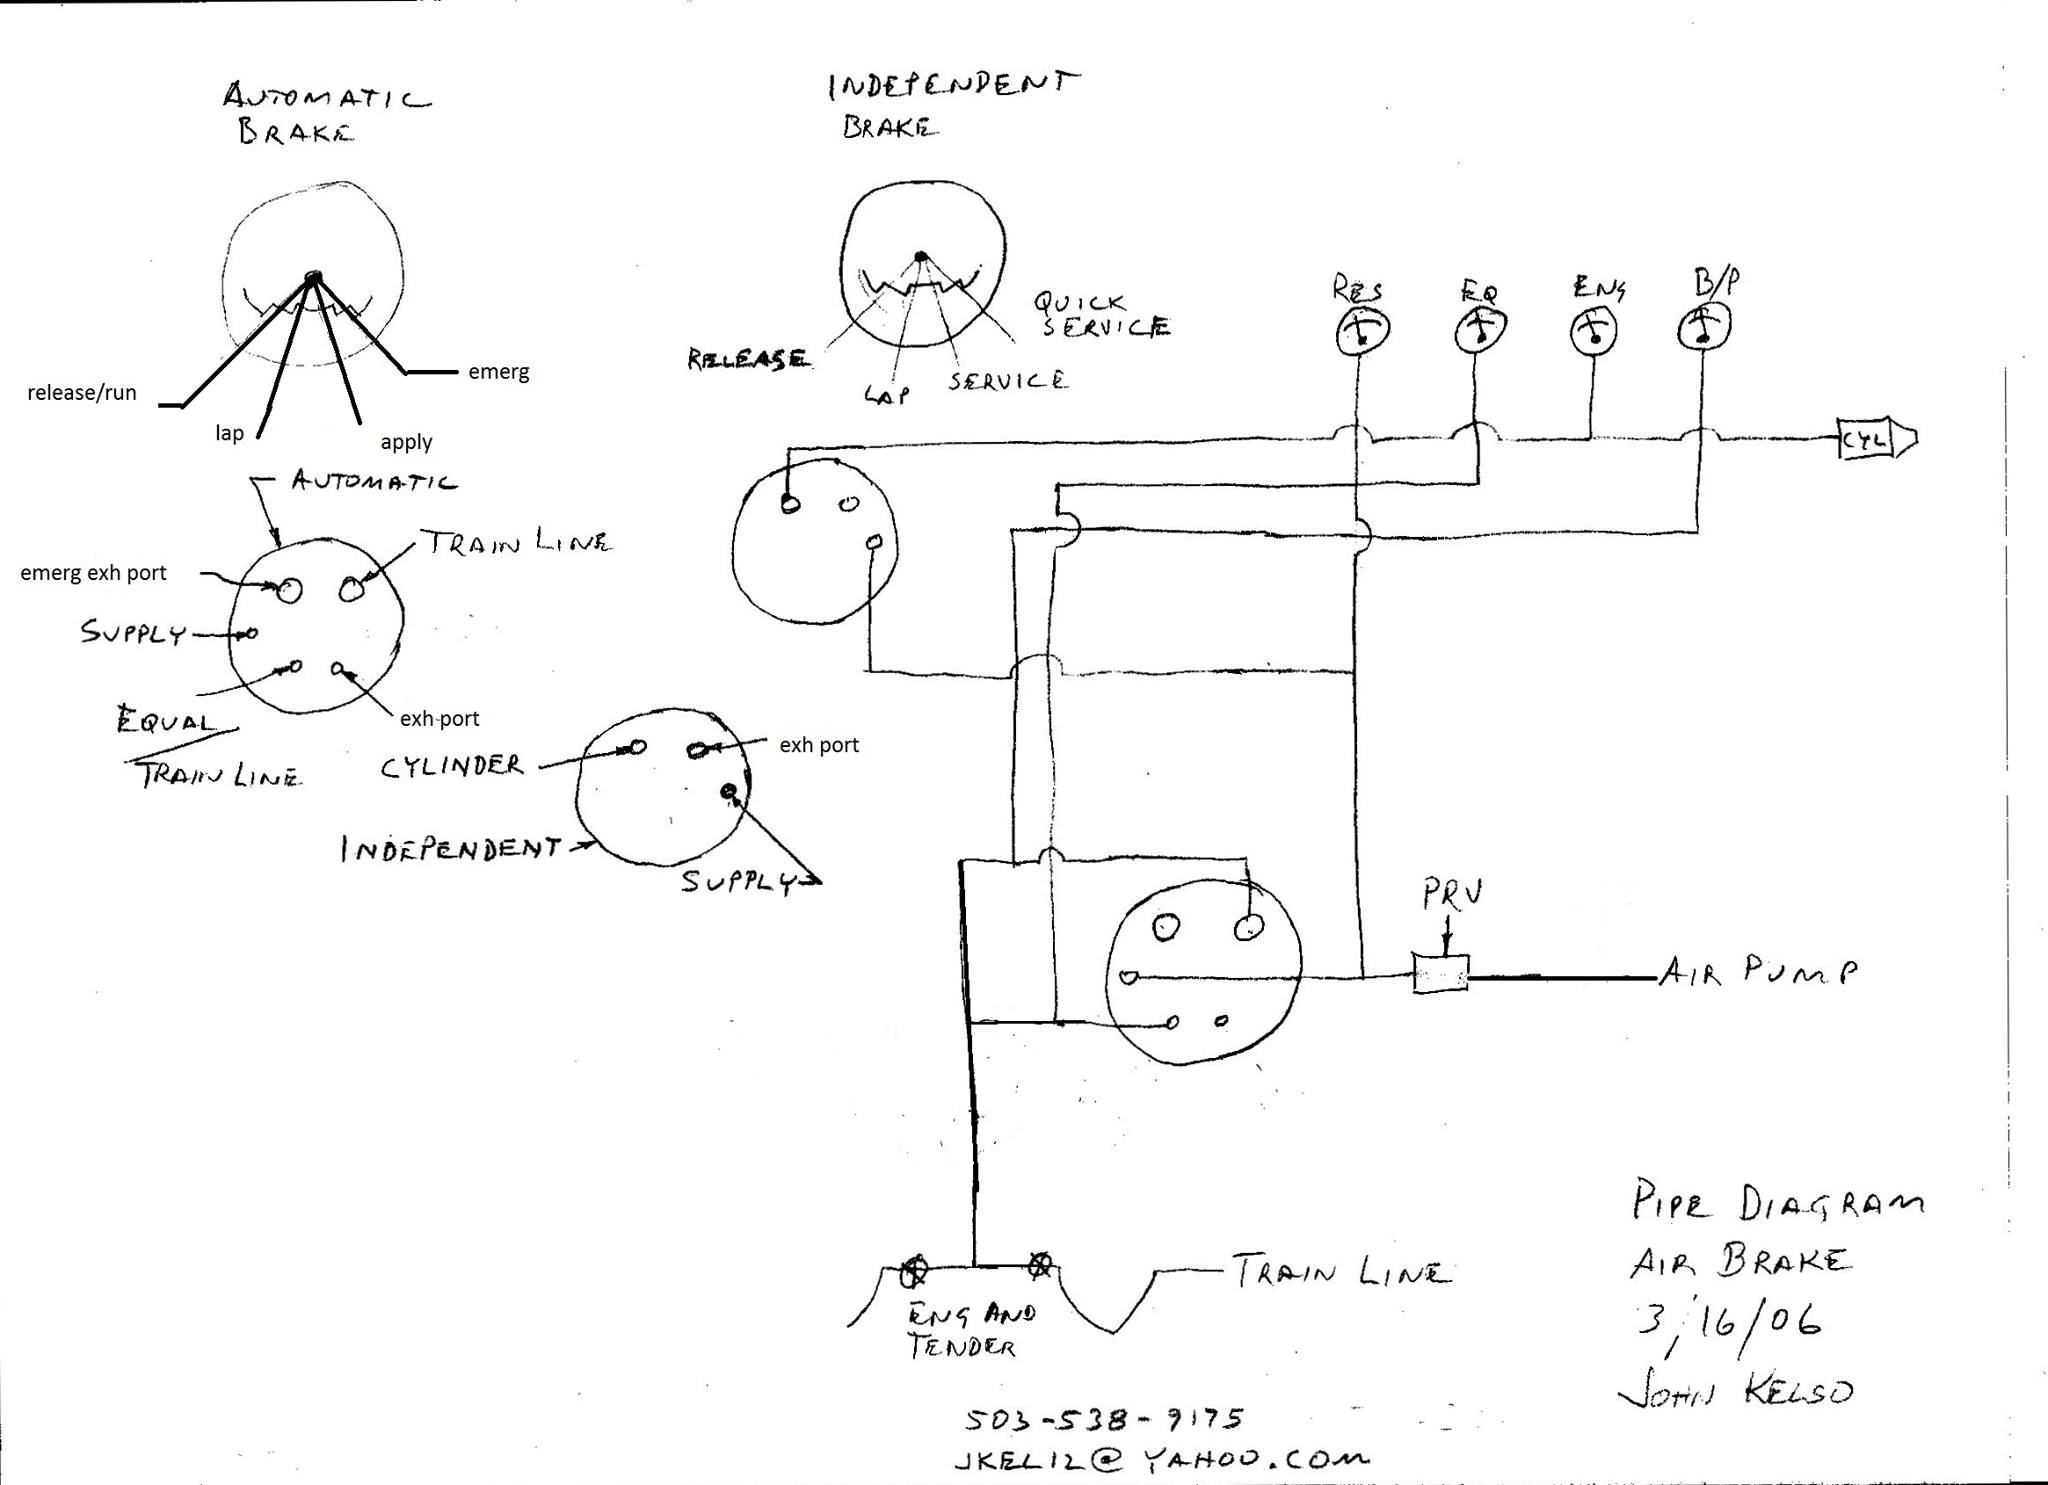 6ET Brake Valve Pipe Diagram, drawn by John Kelso, 16 March 2016